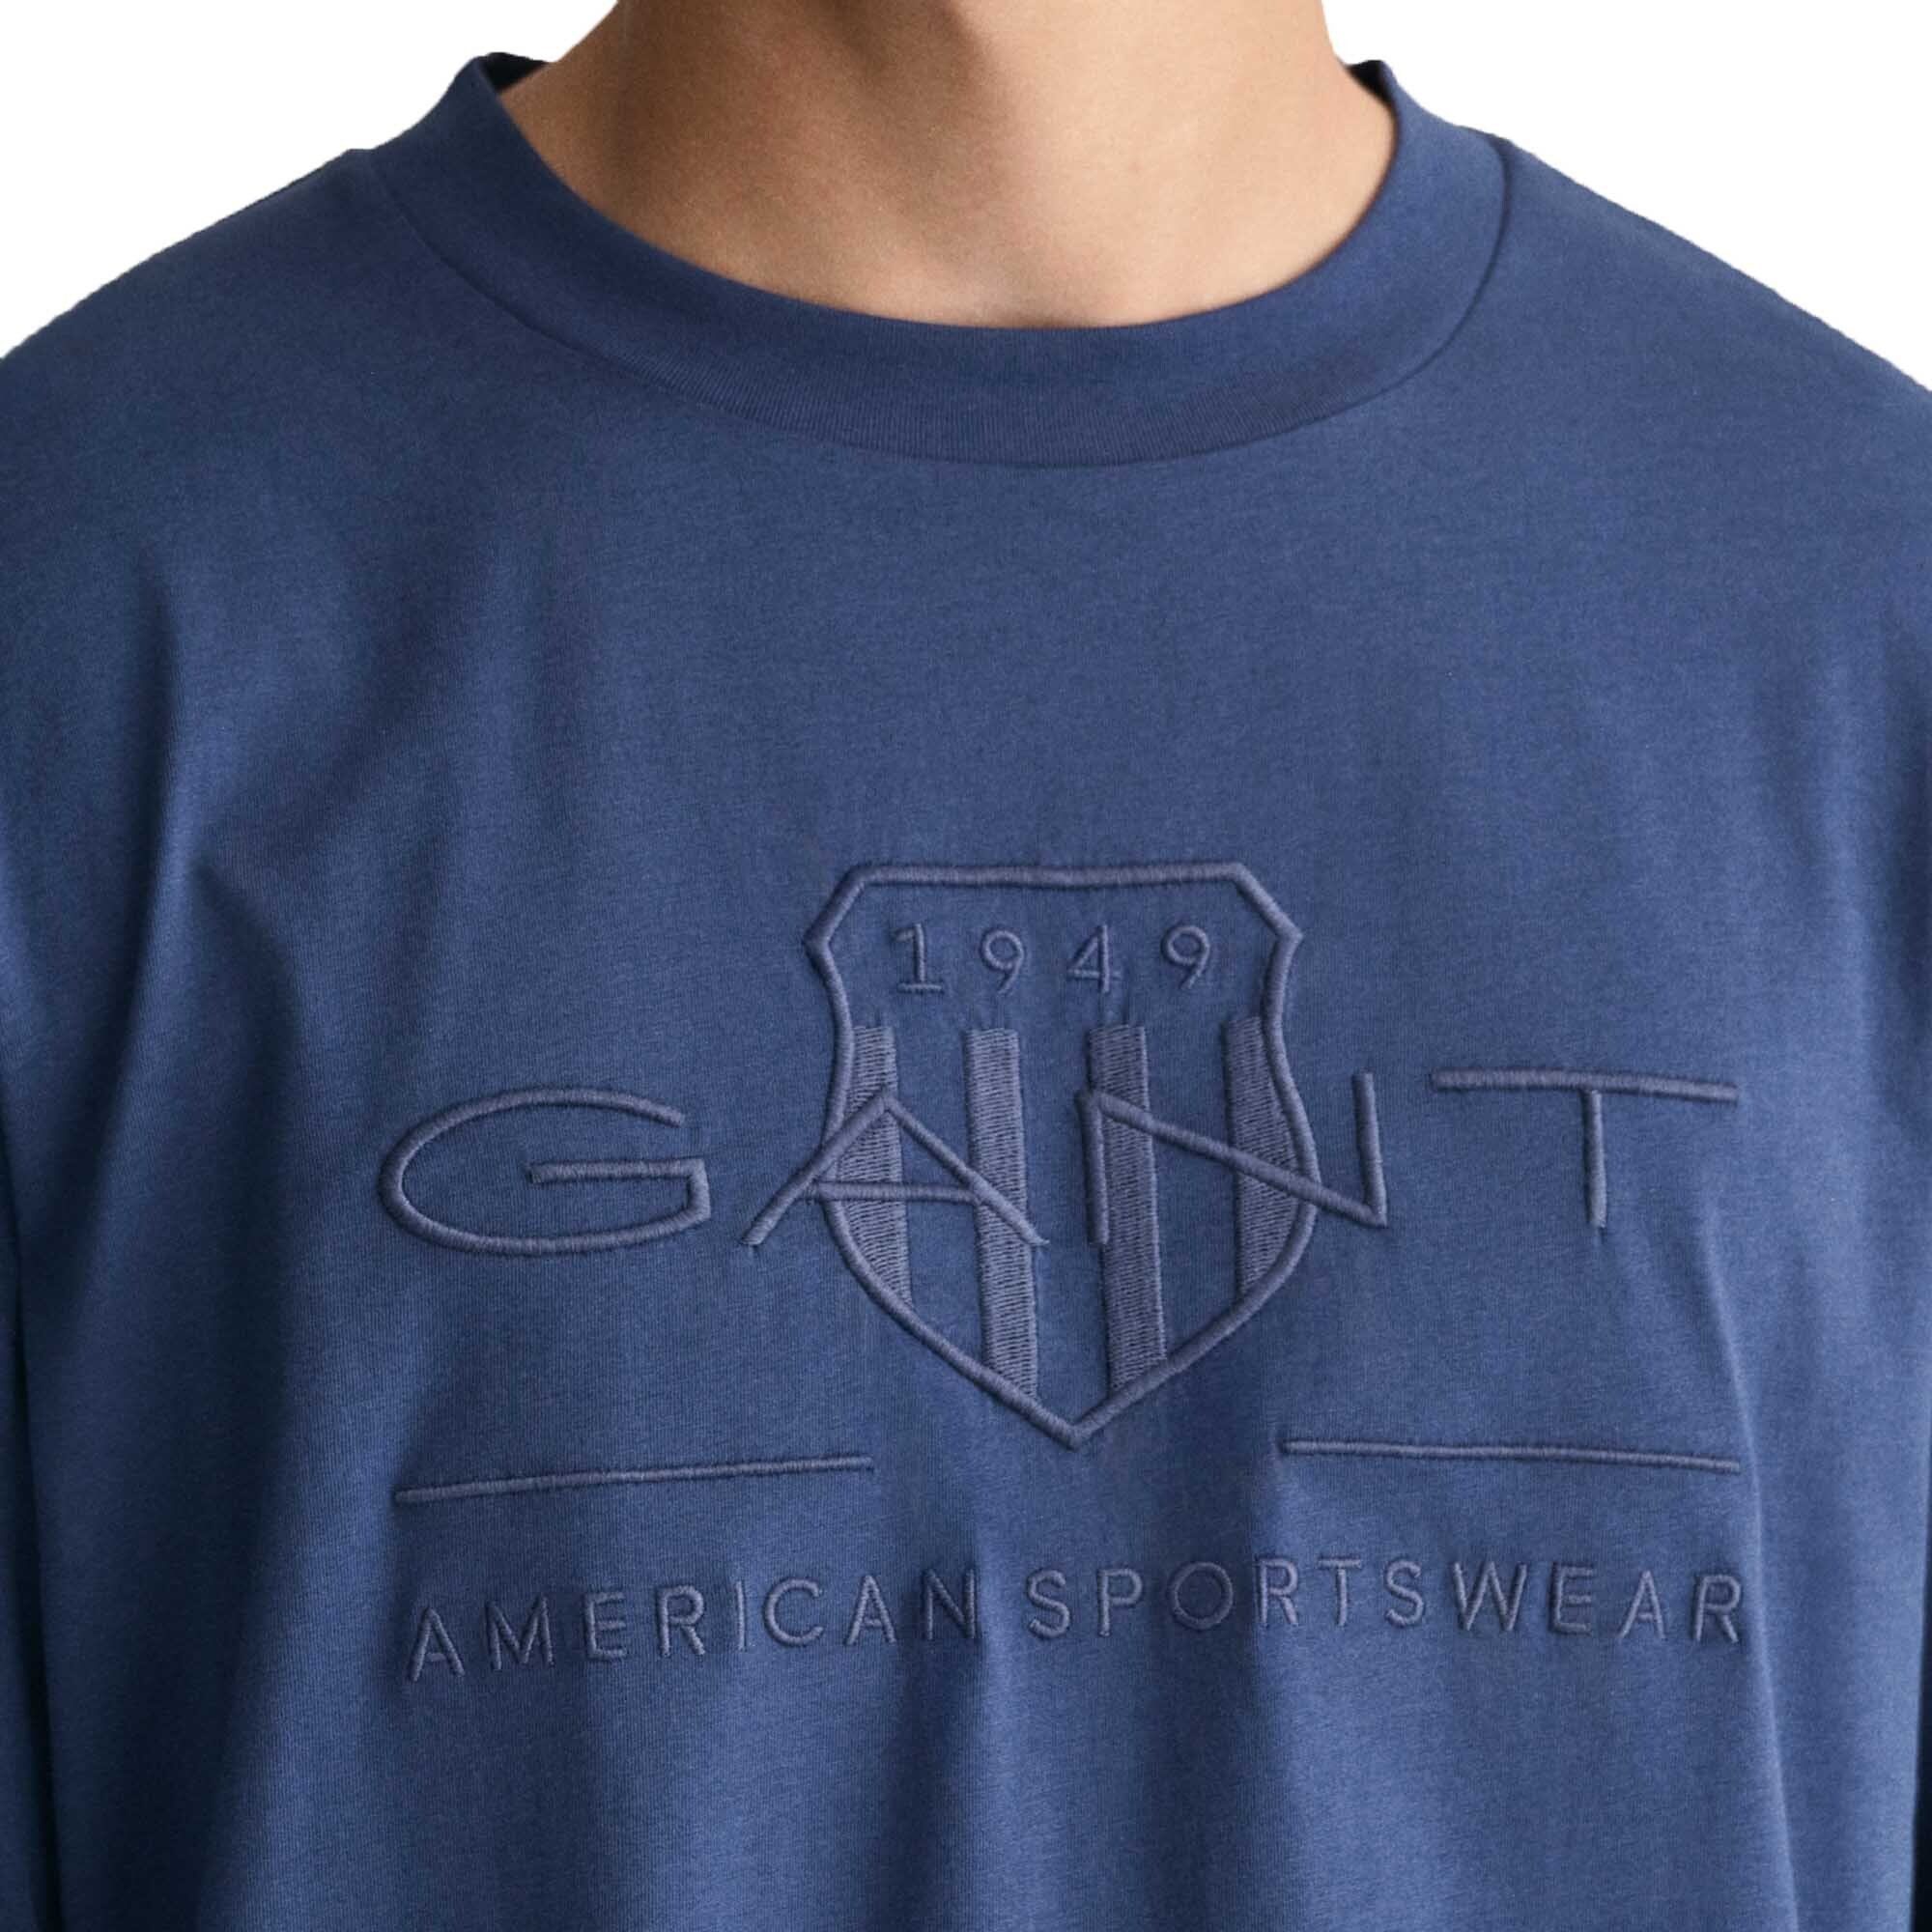 SHIELD TONAL T-Shirt - REG T-Shirt T-SHIRT Herren Dunkelblau Gant